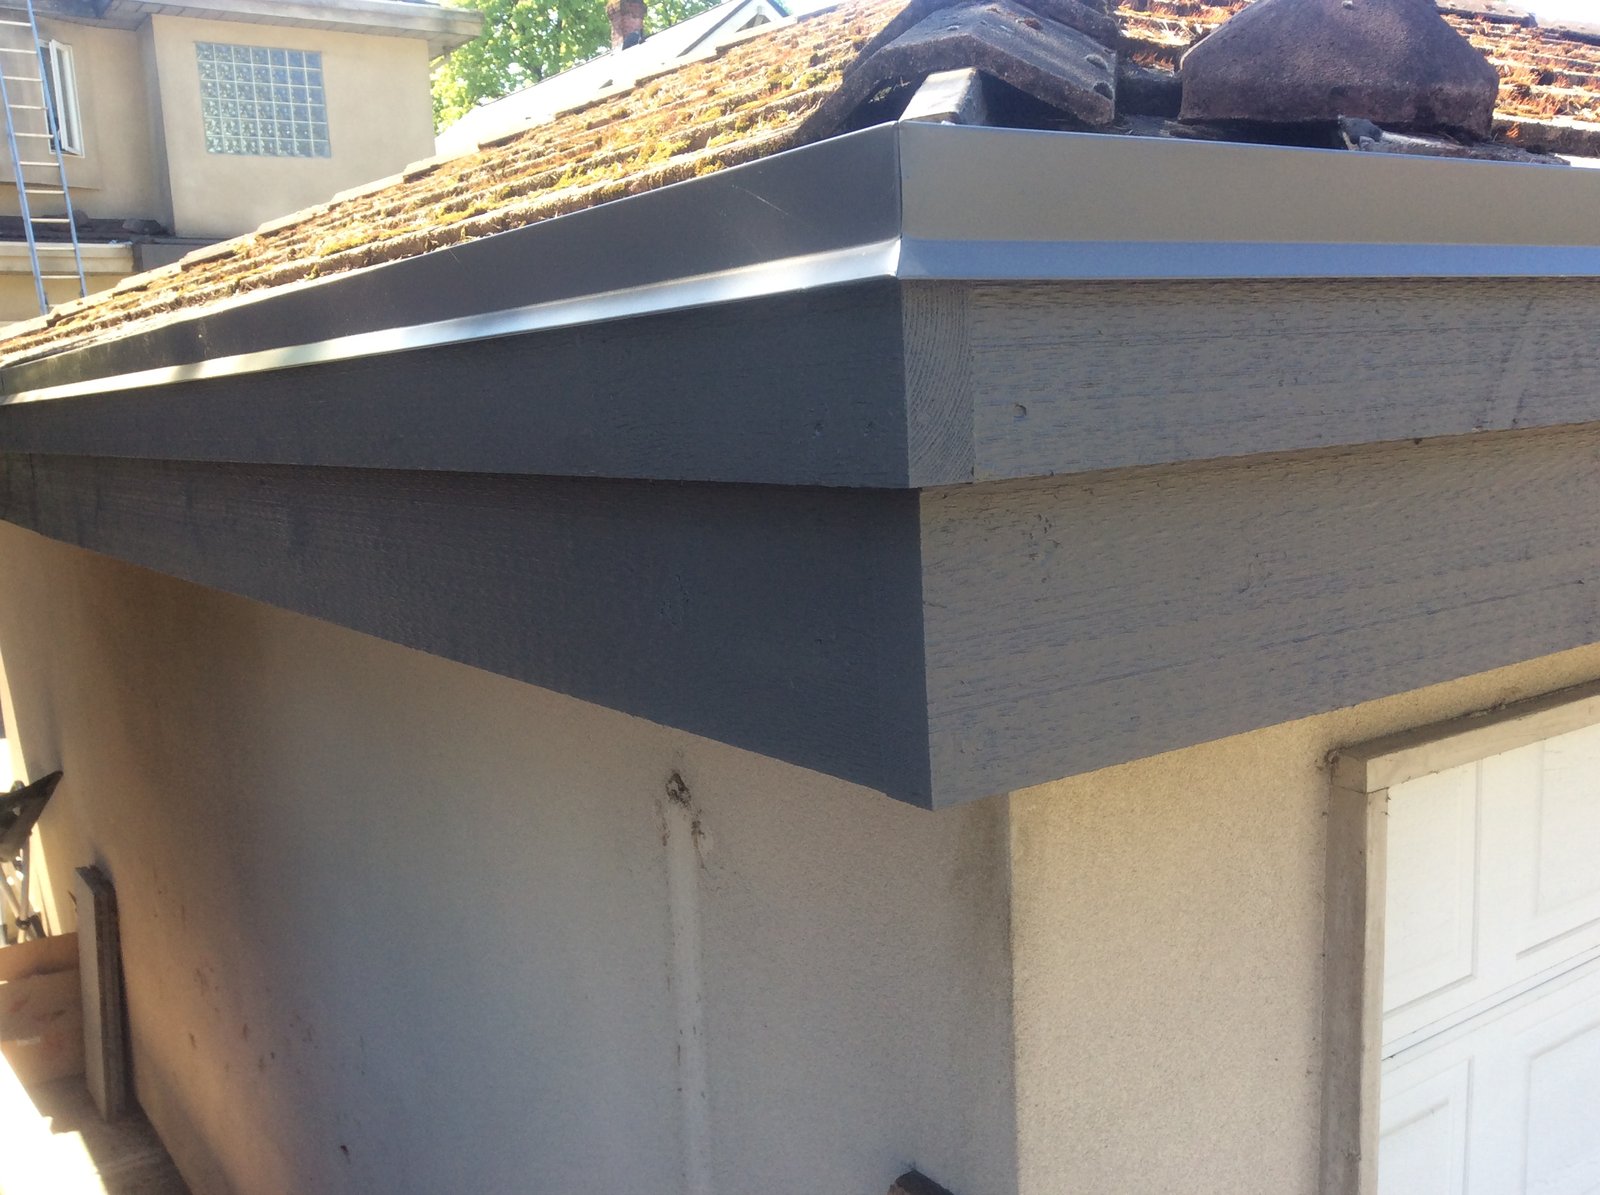 Hidden Gutter Repair for Kitsilano Home - Restored Facia Board and Gutter System